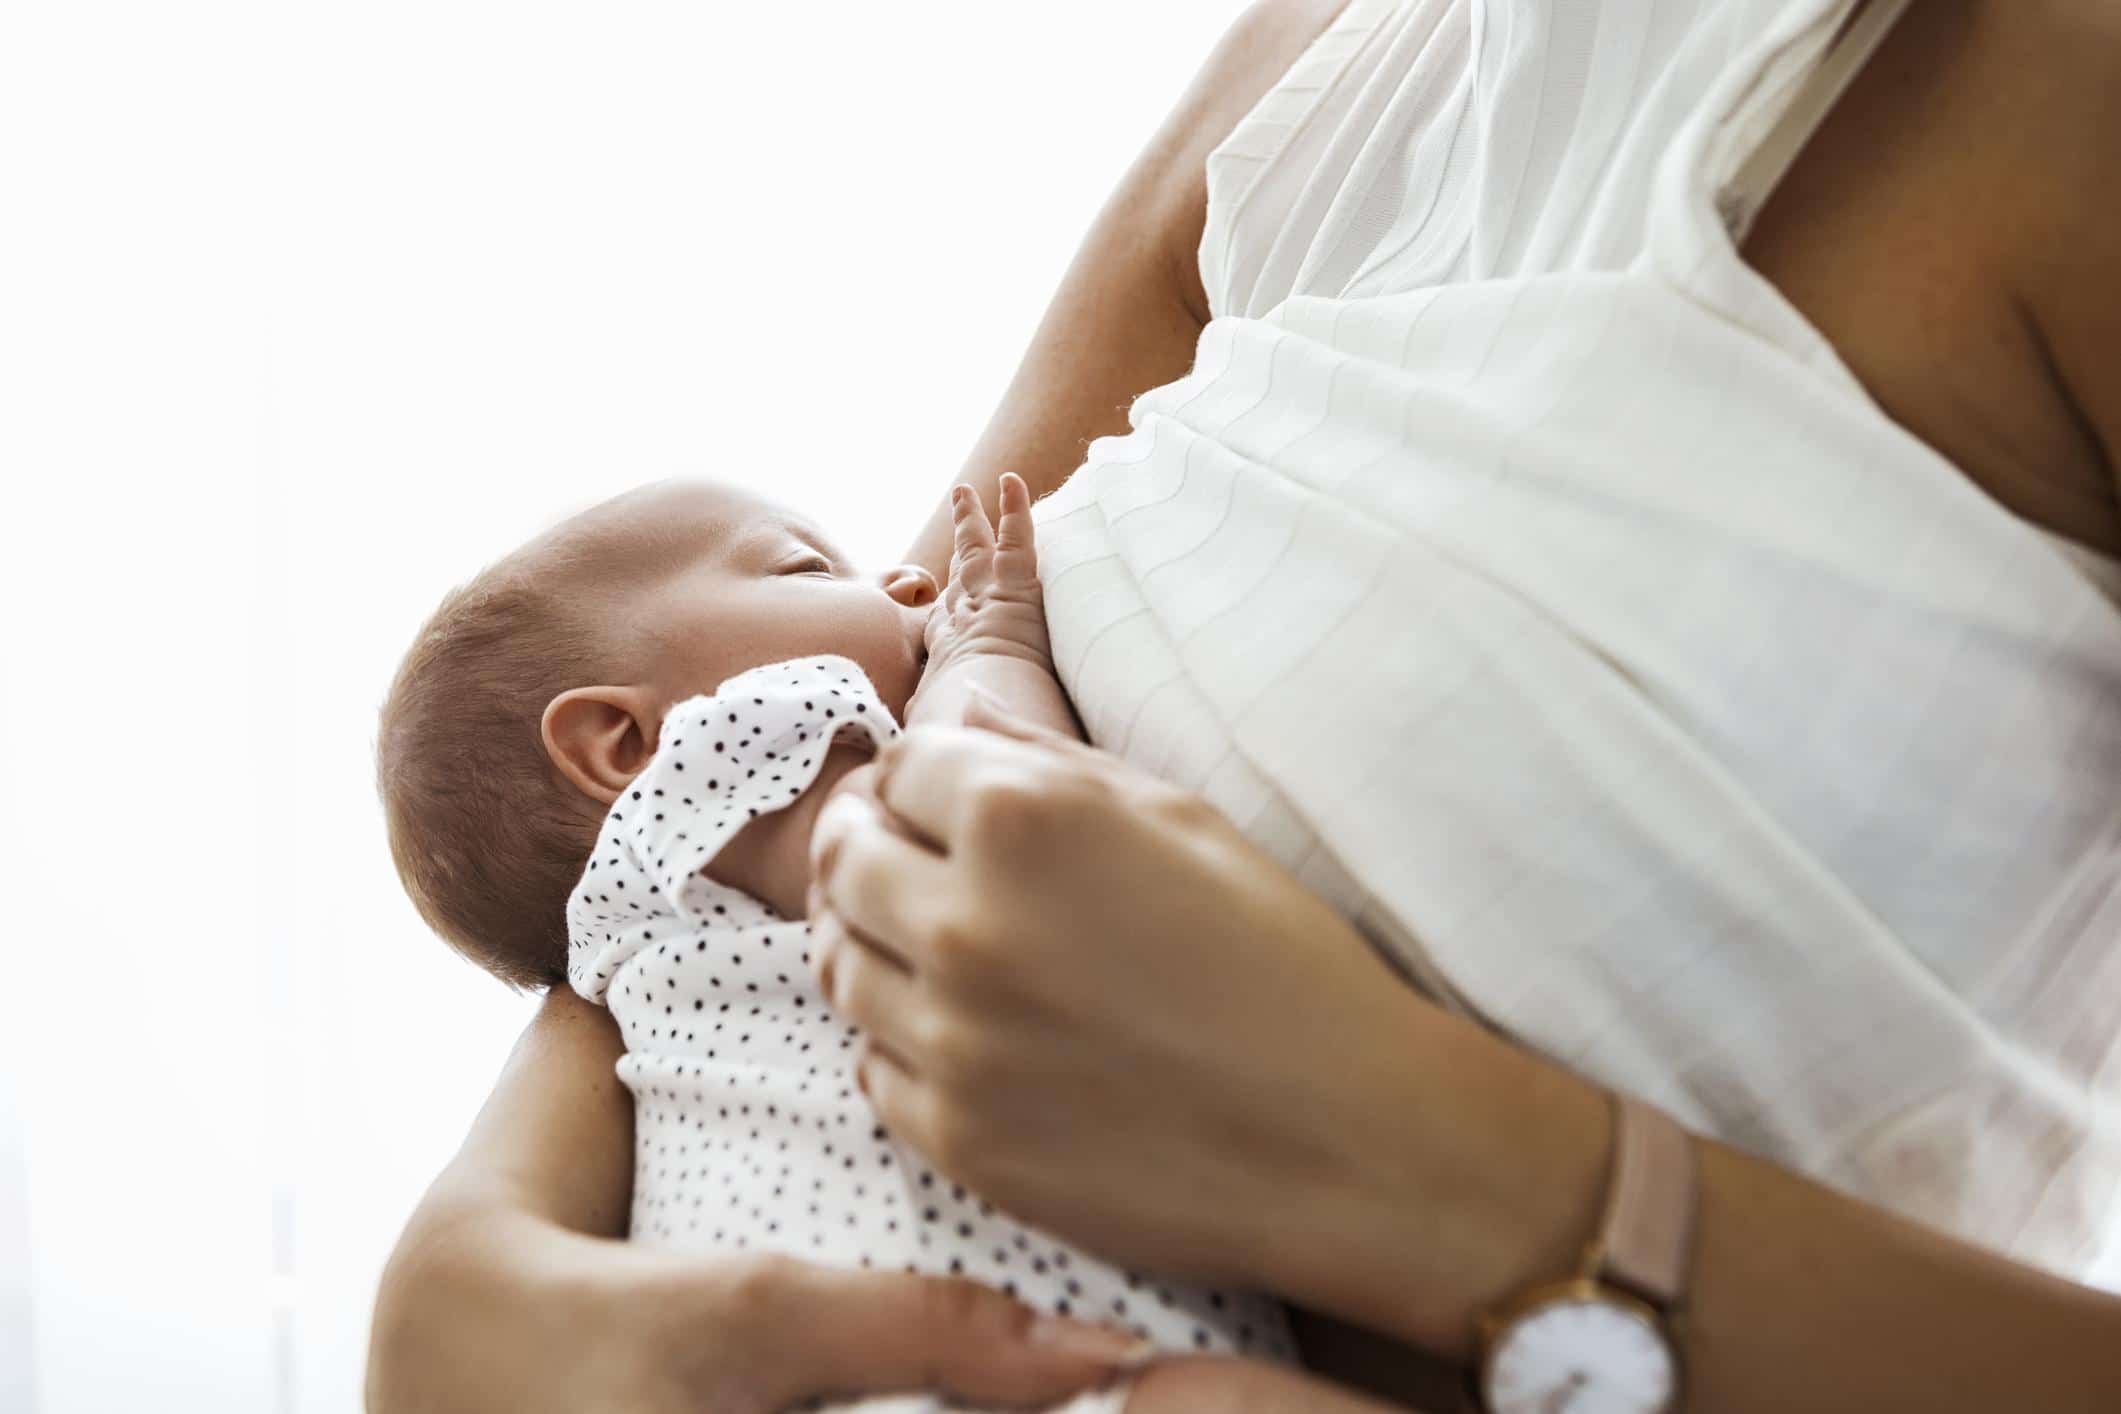 mom breastfeeding newborn baby - what not to eat when breastfeeding